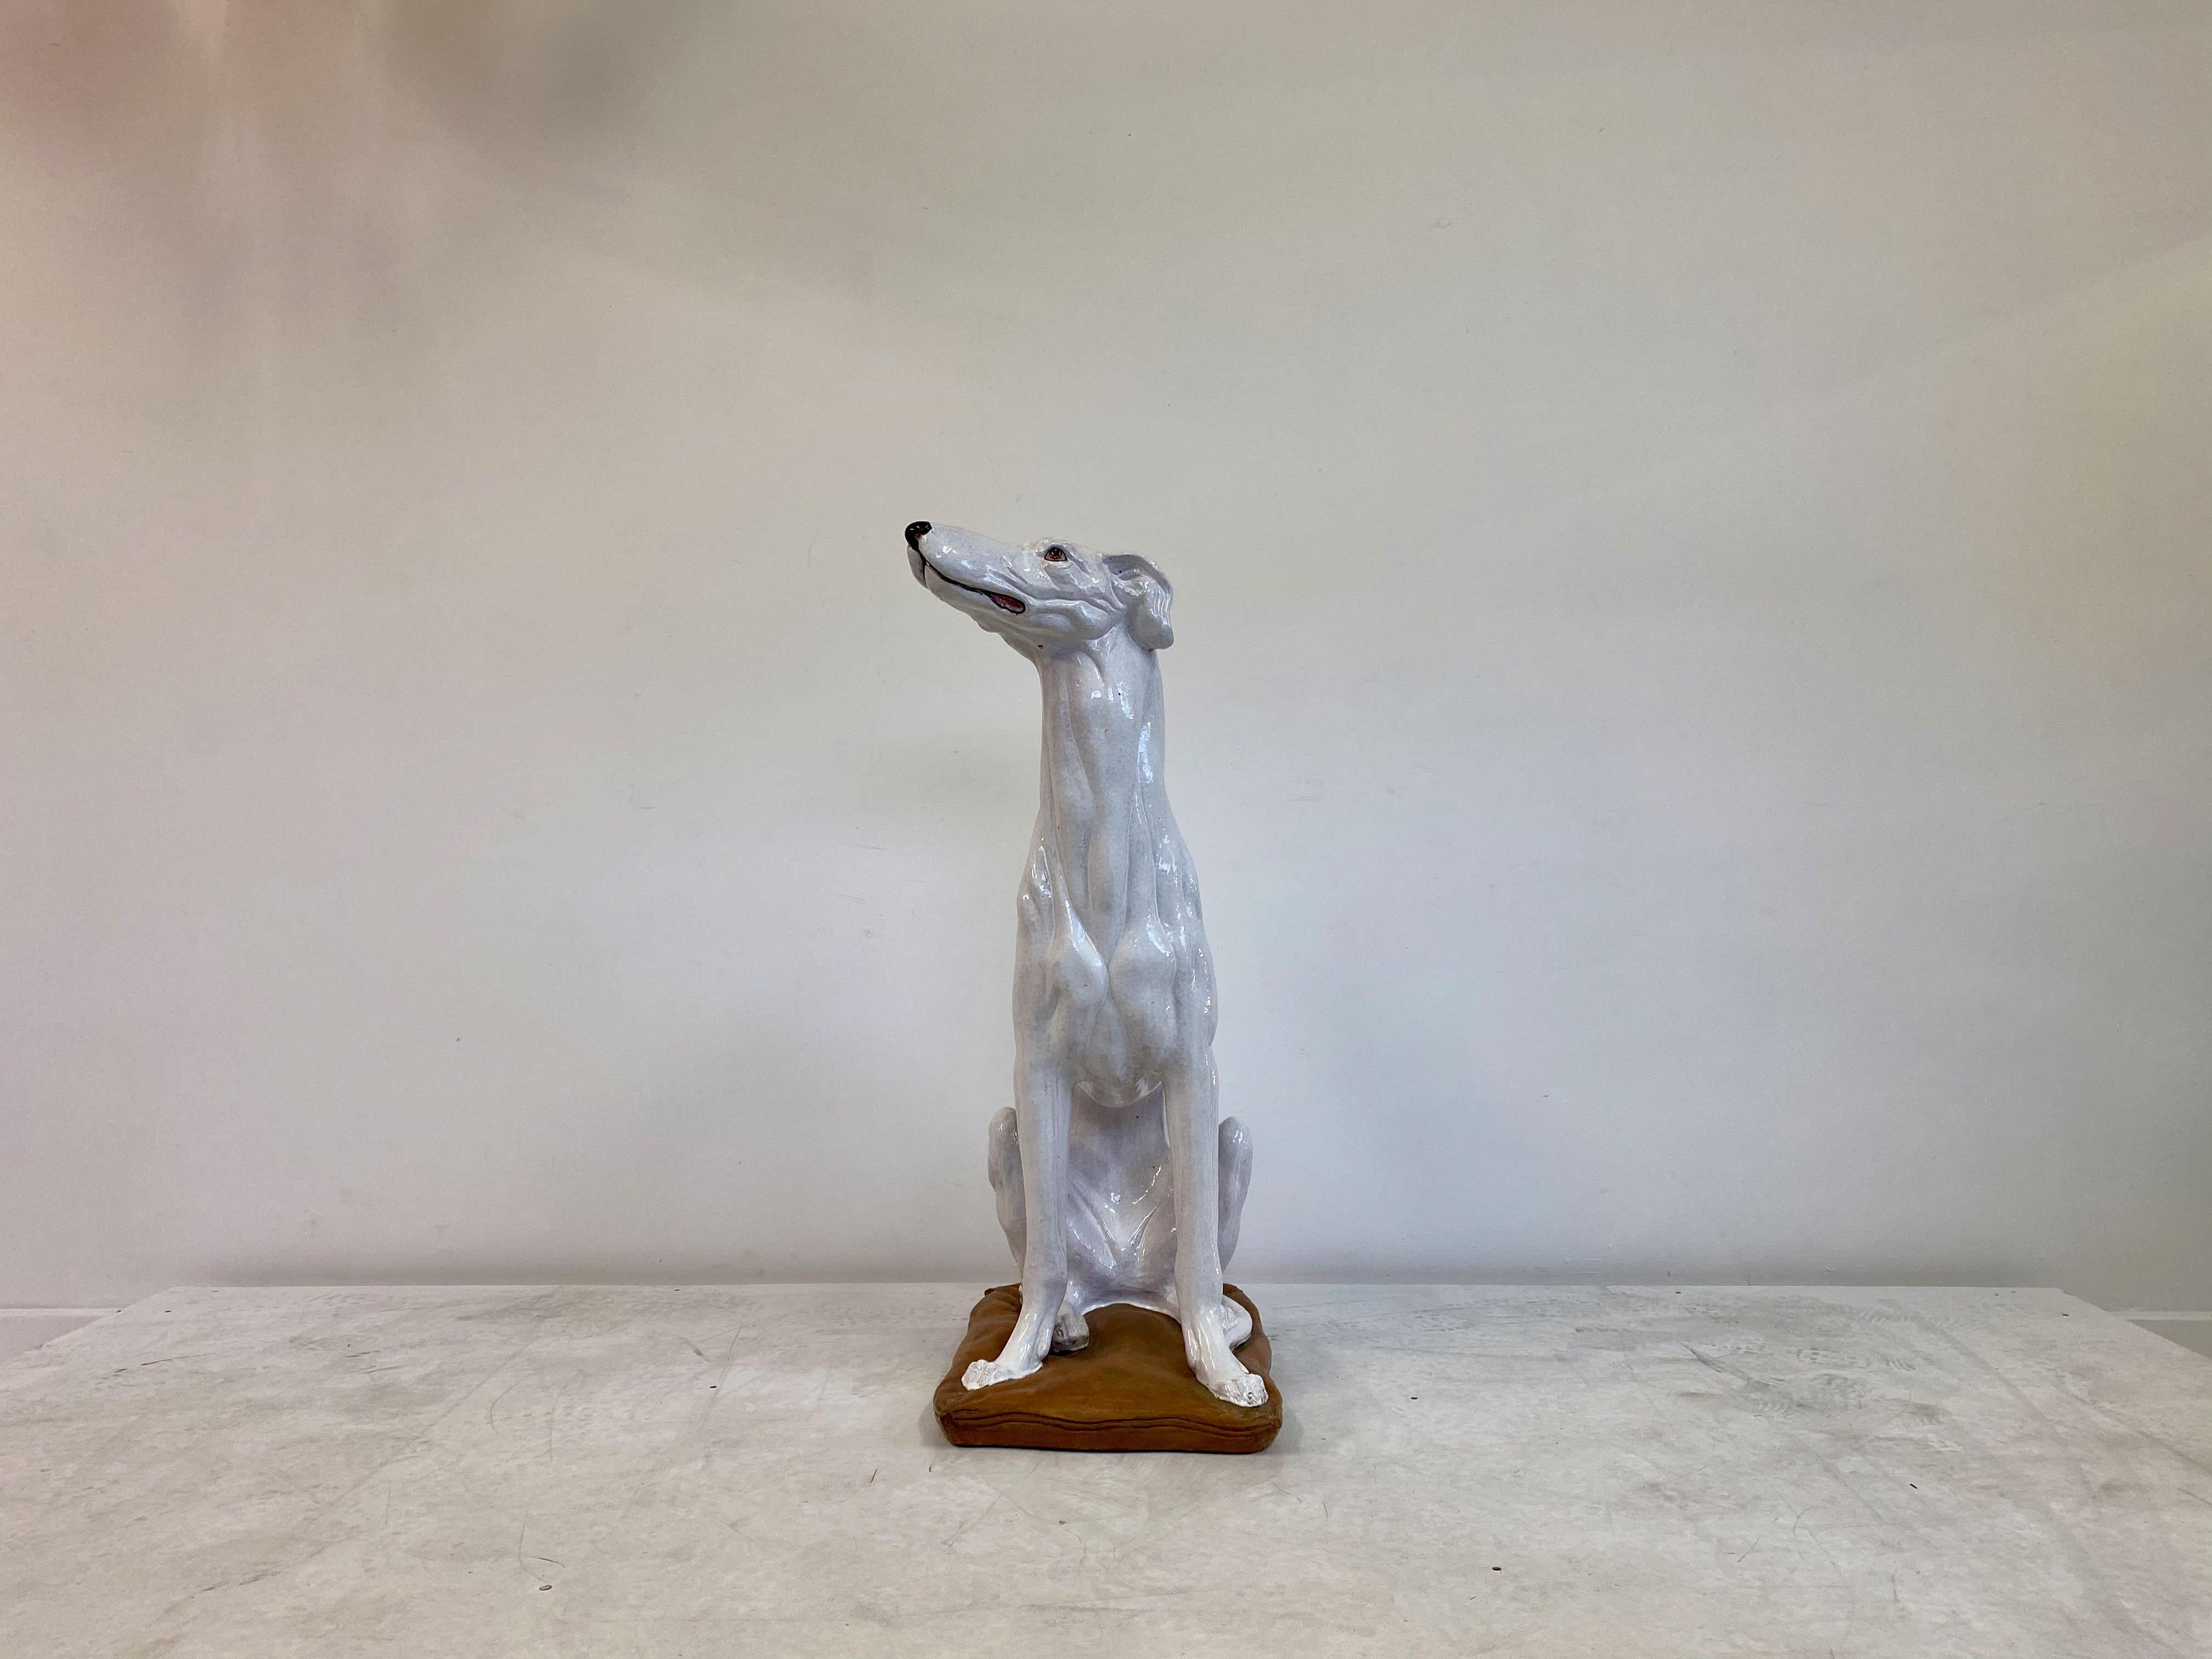 Model of a greyhound

Terracotta

Glazed

Nicely modelled 

Italy midcentury.